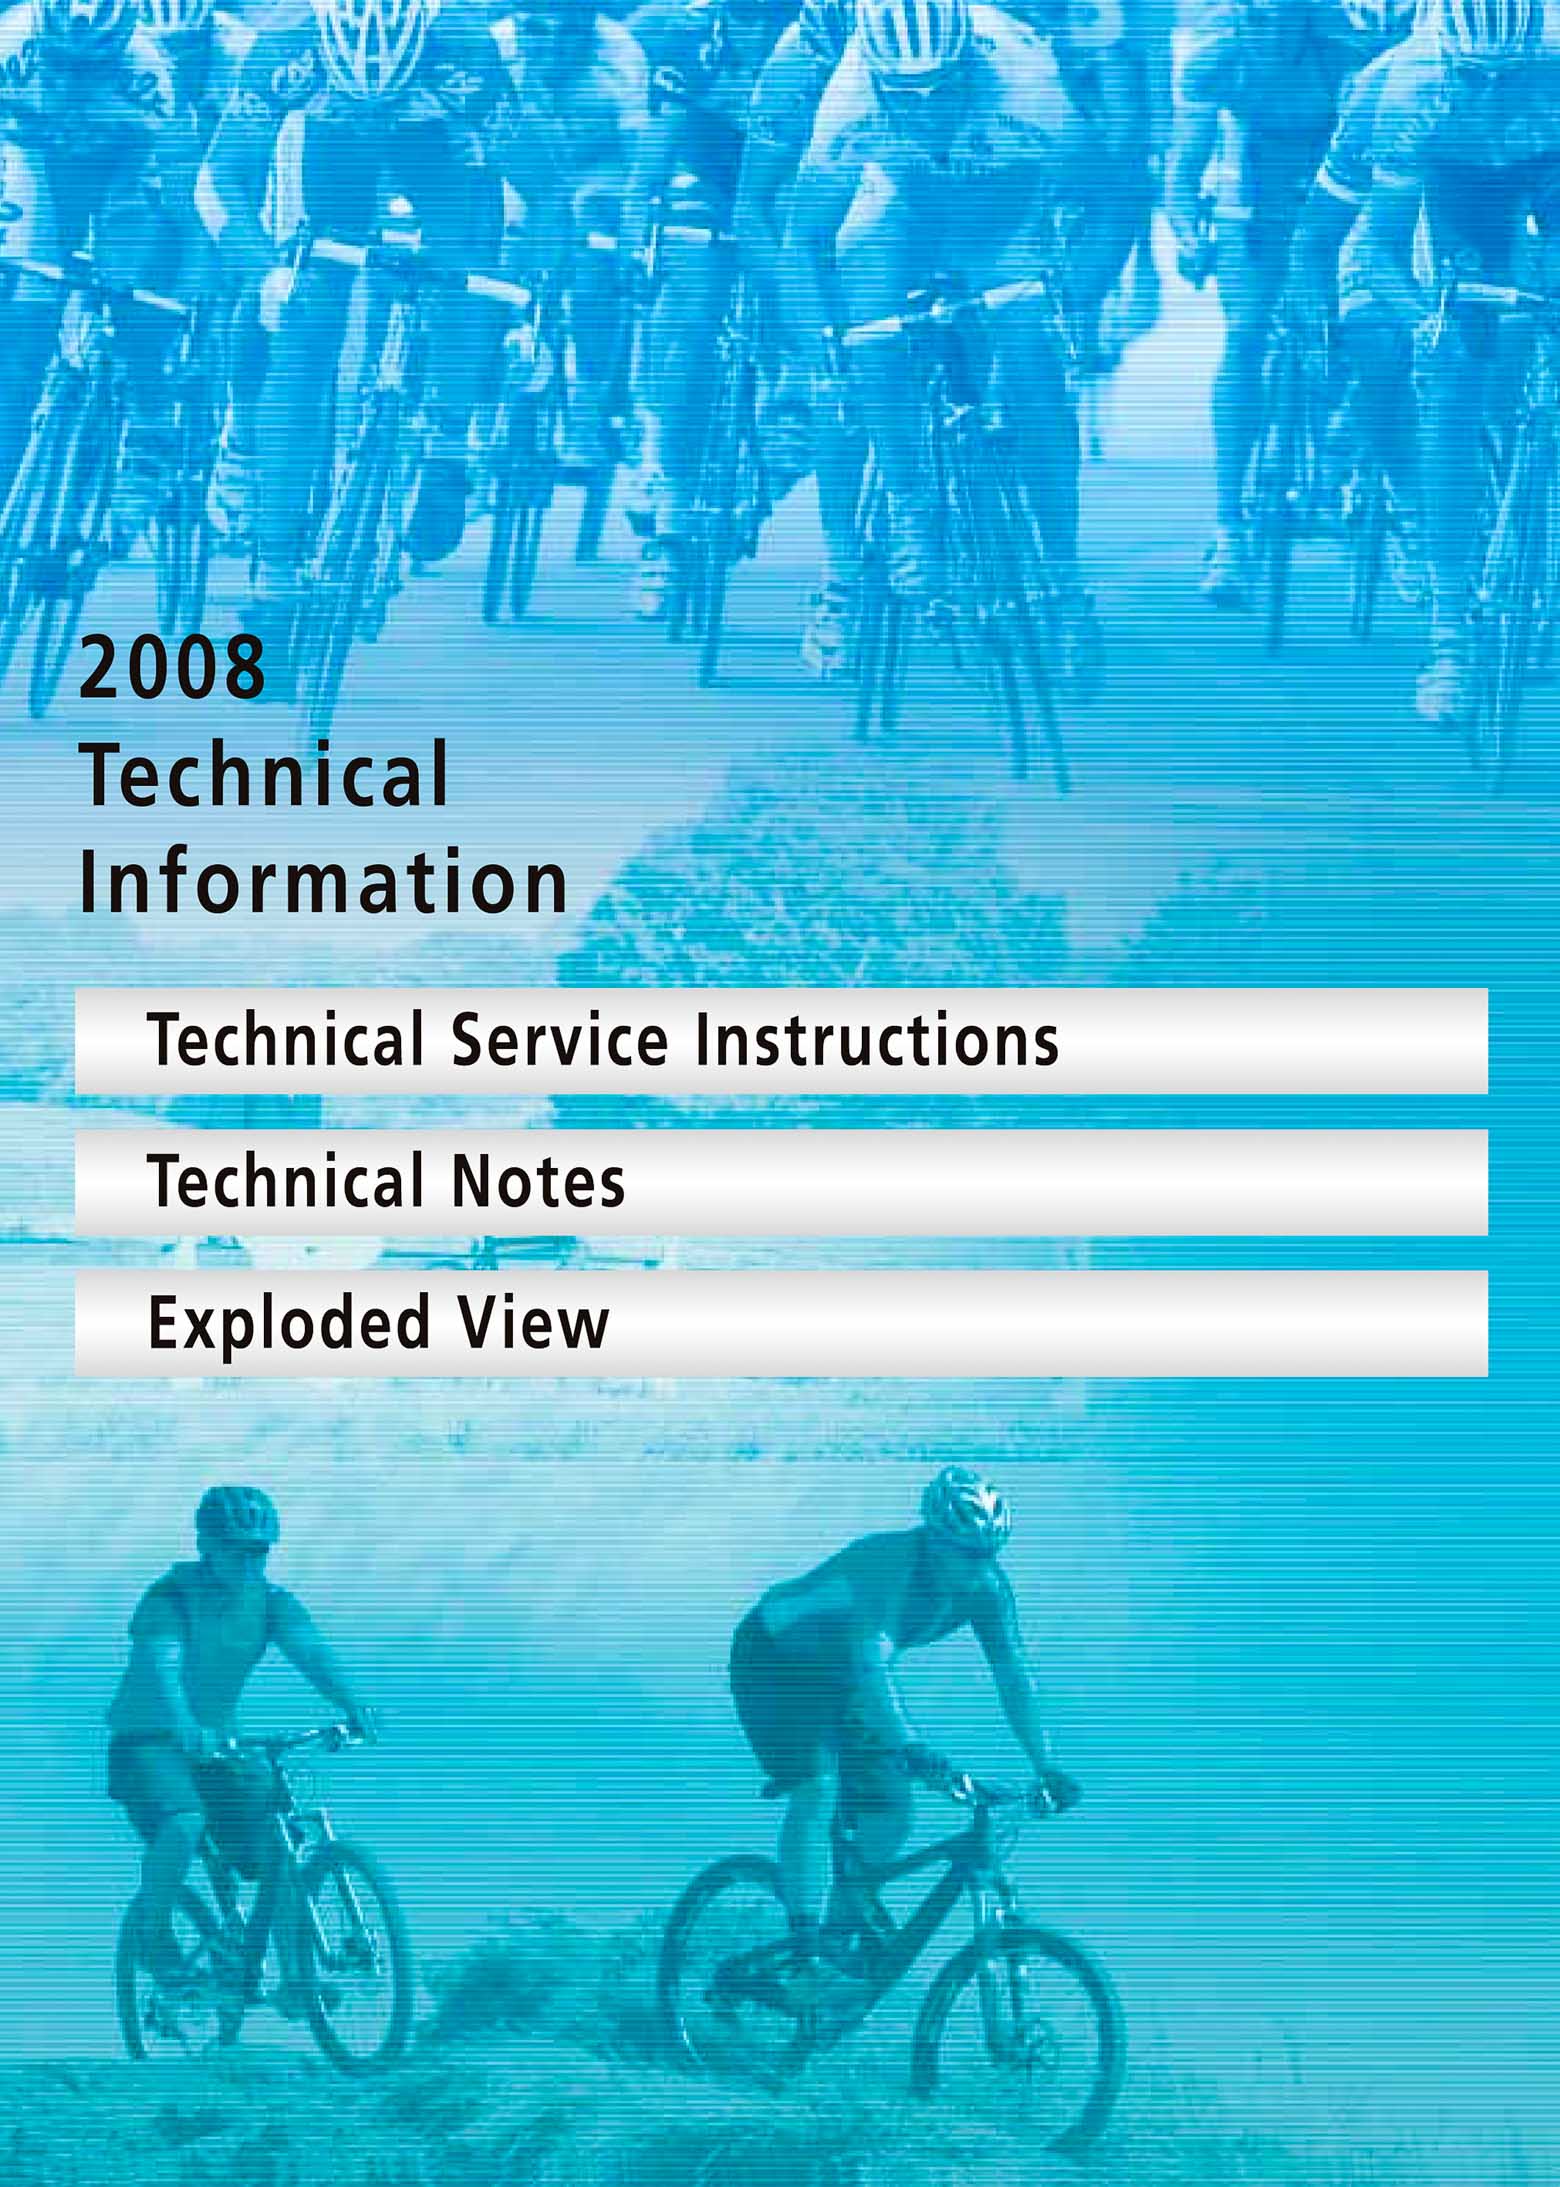 Shimano Technical Information - 2008 image 01 main image